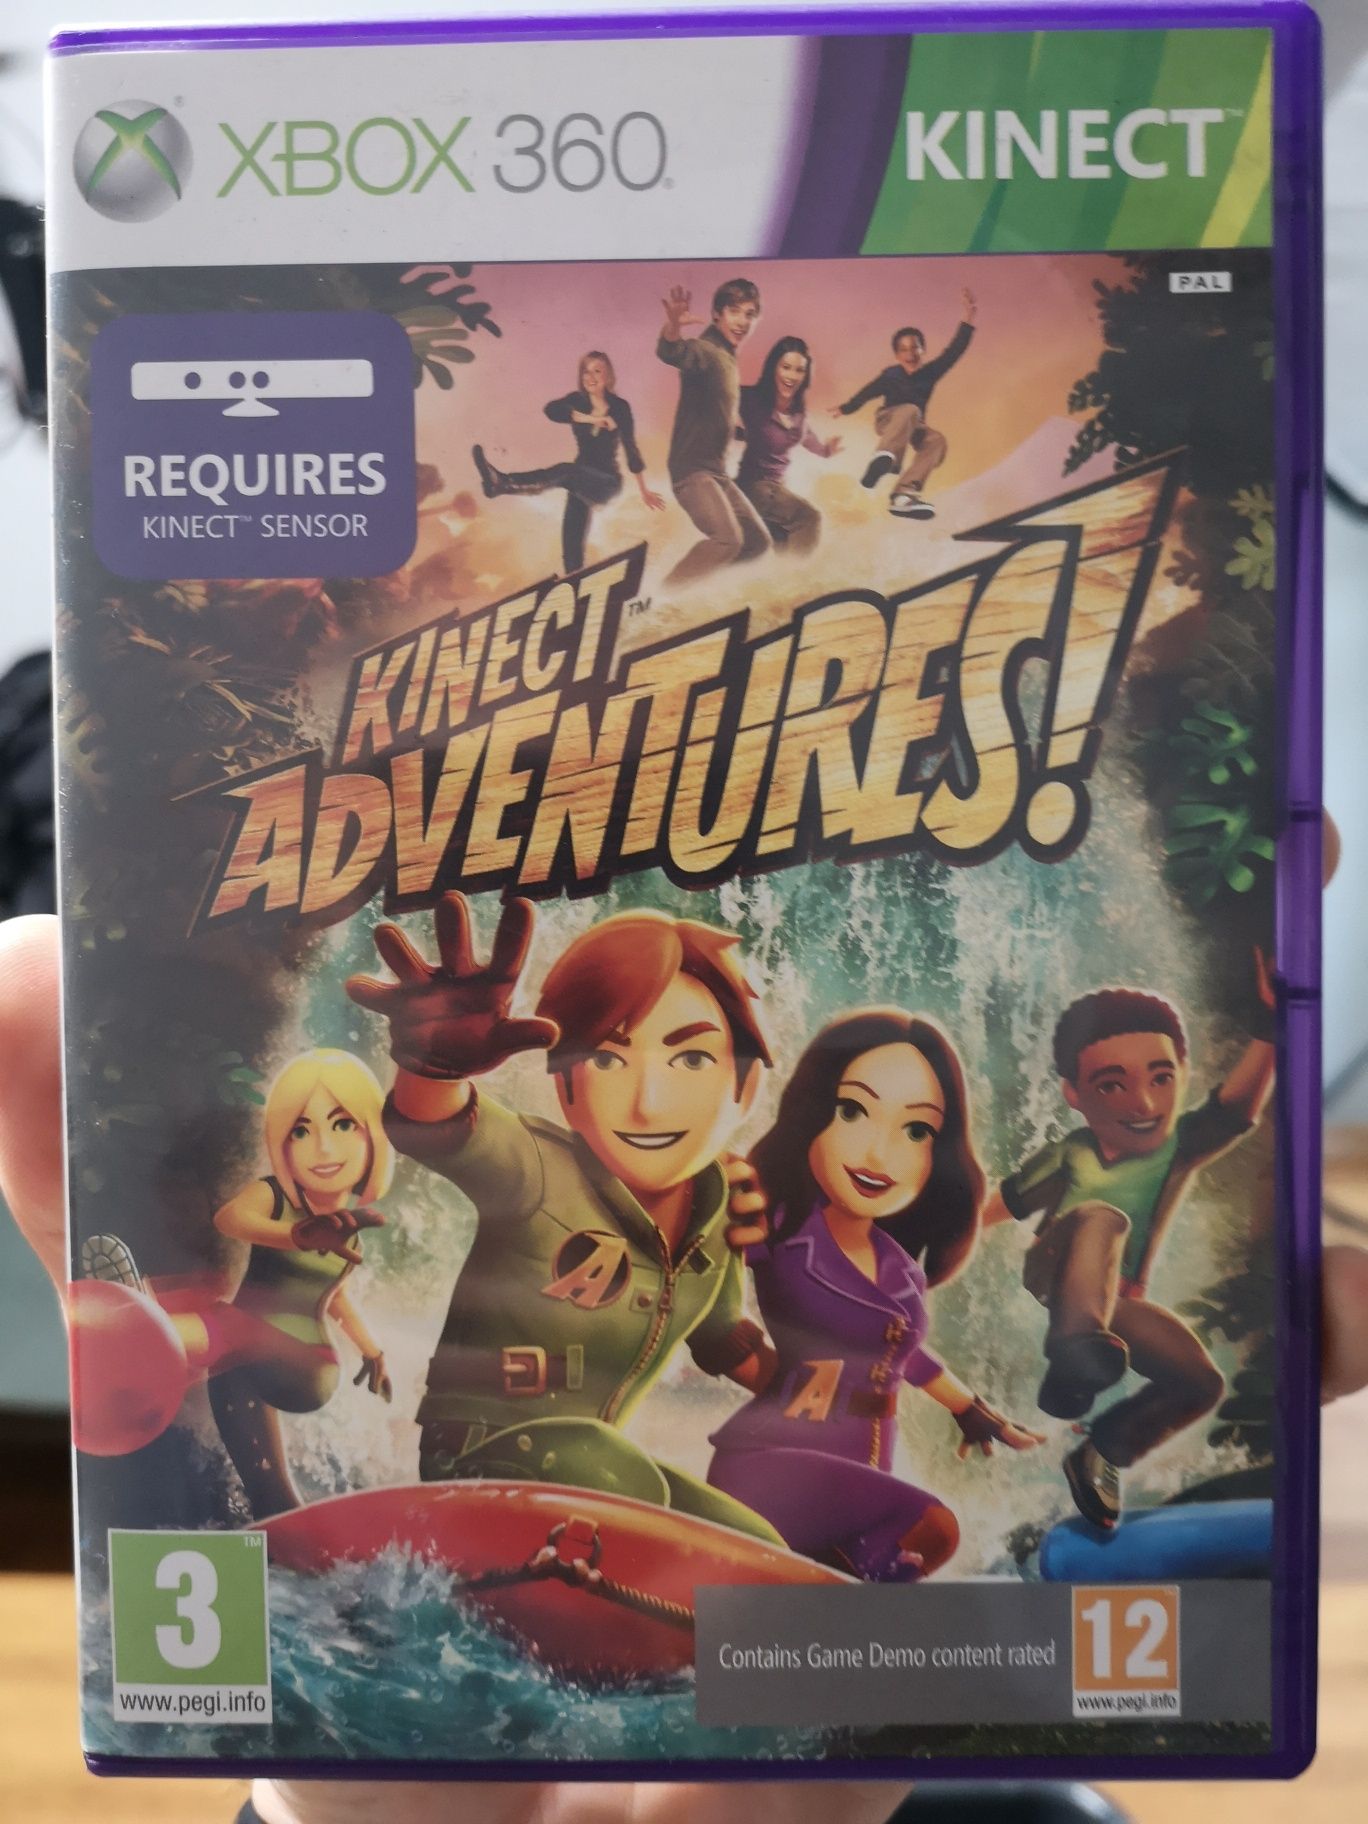 Xbox 360 Kinekt Adventure Game